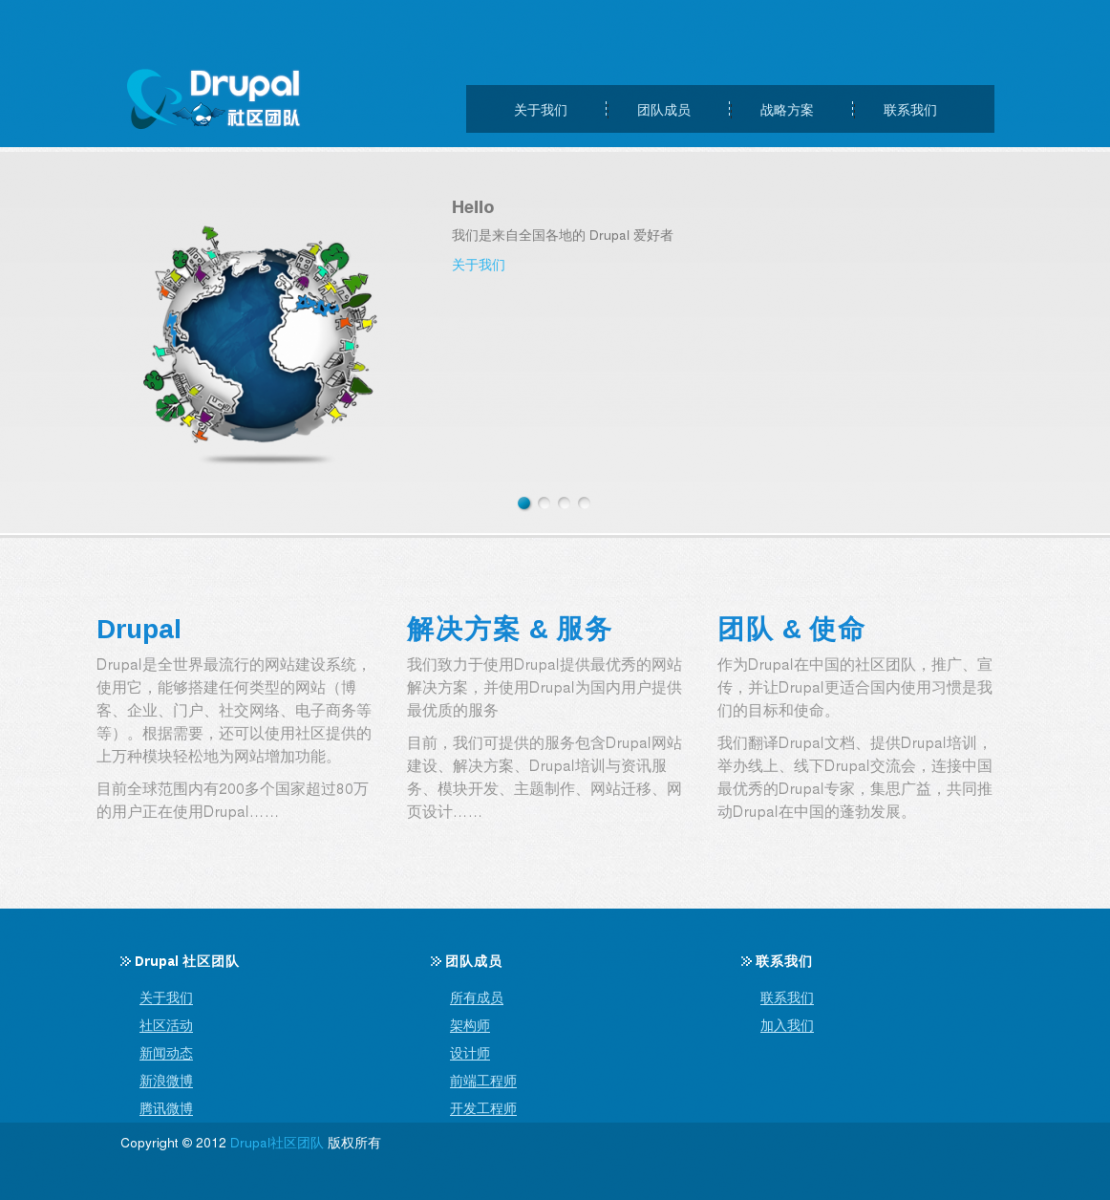 Drupal社区团队